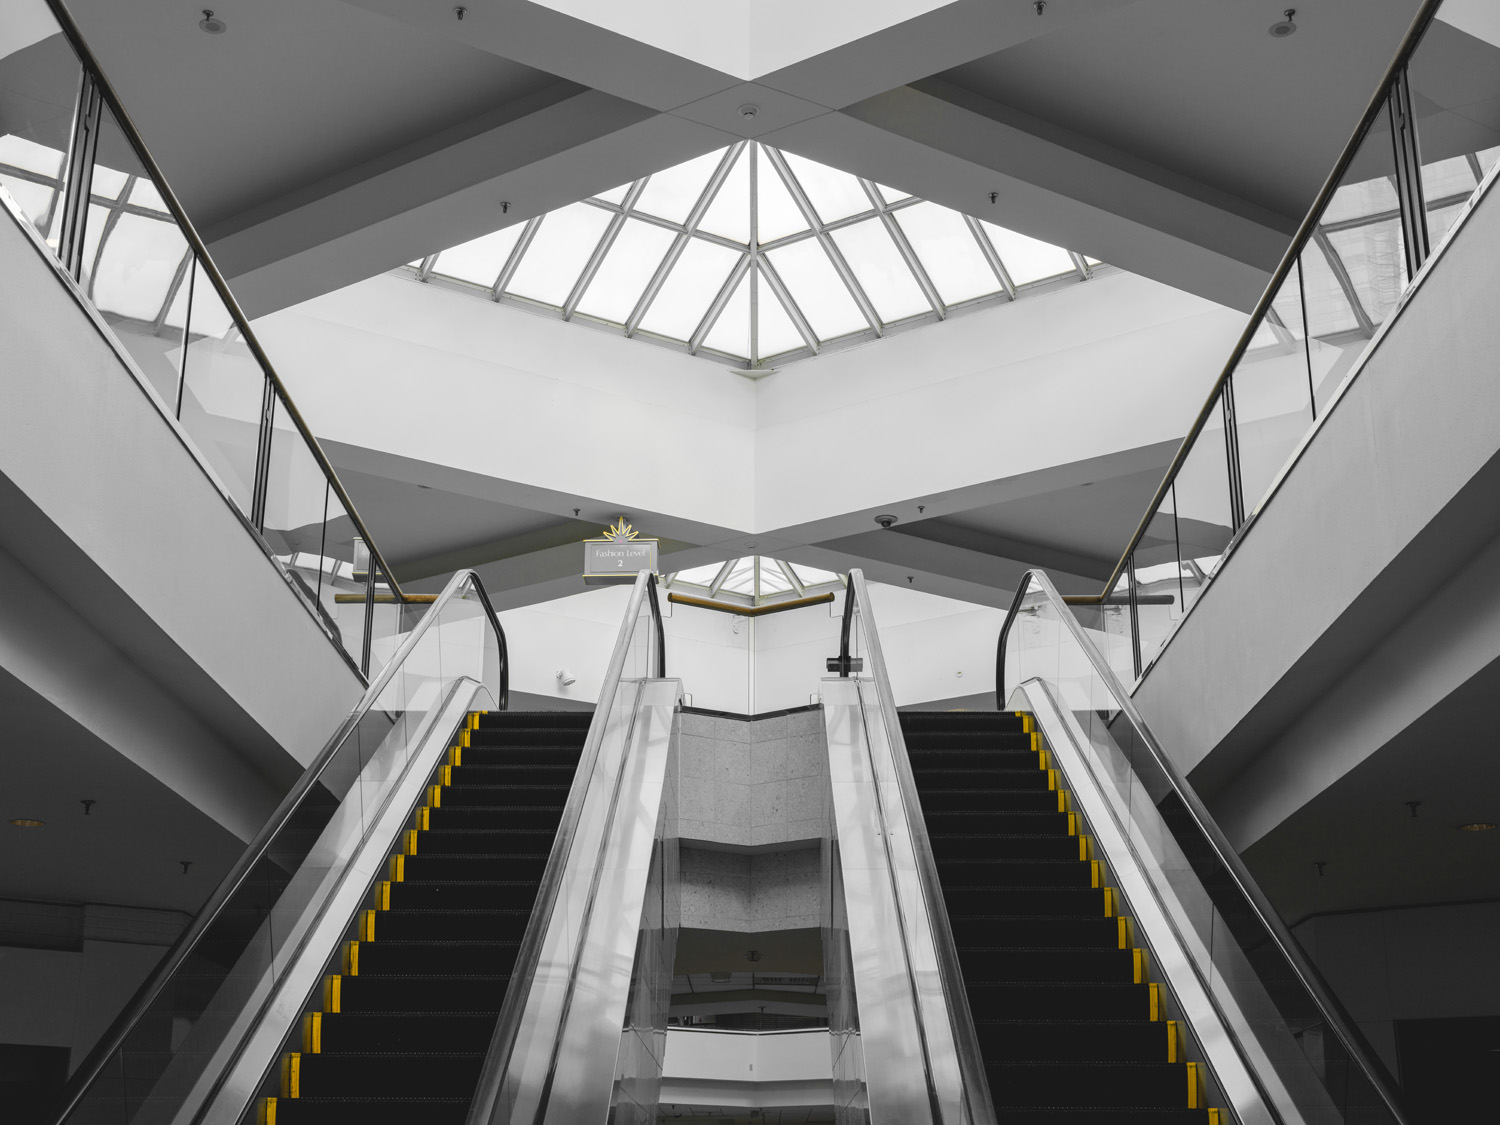 Photograph of symmetrical escalators in grey building